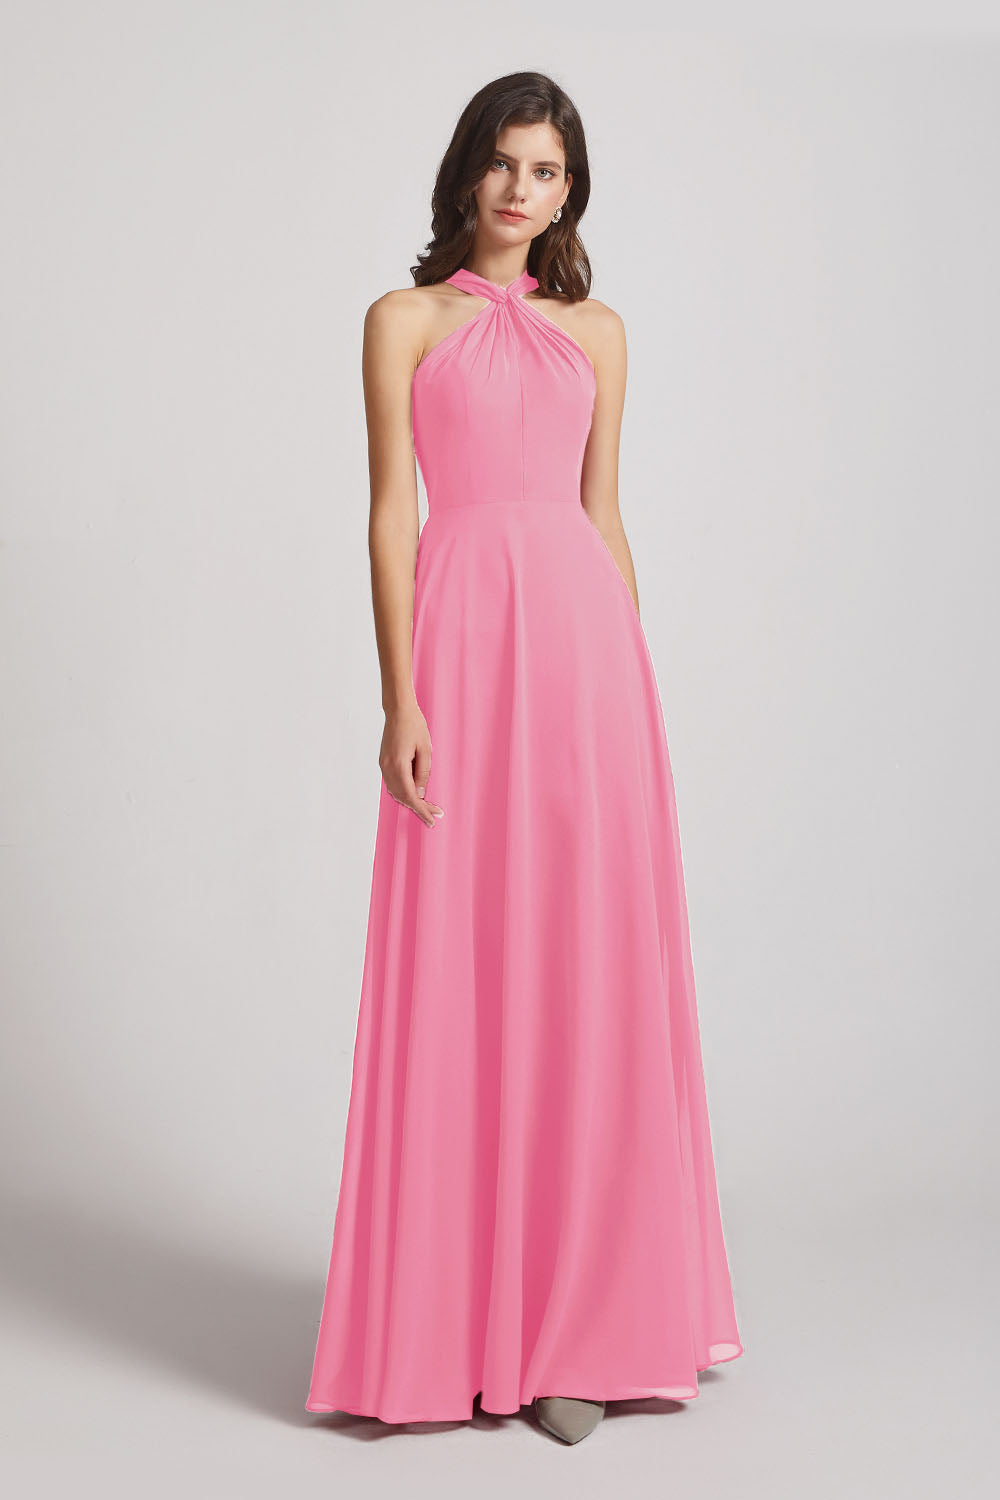 Alfa Bridal Hot Pink Floor Length Chiffon Bridesmaid Dresses with Criss Cross Neckline (AF0113)